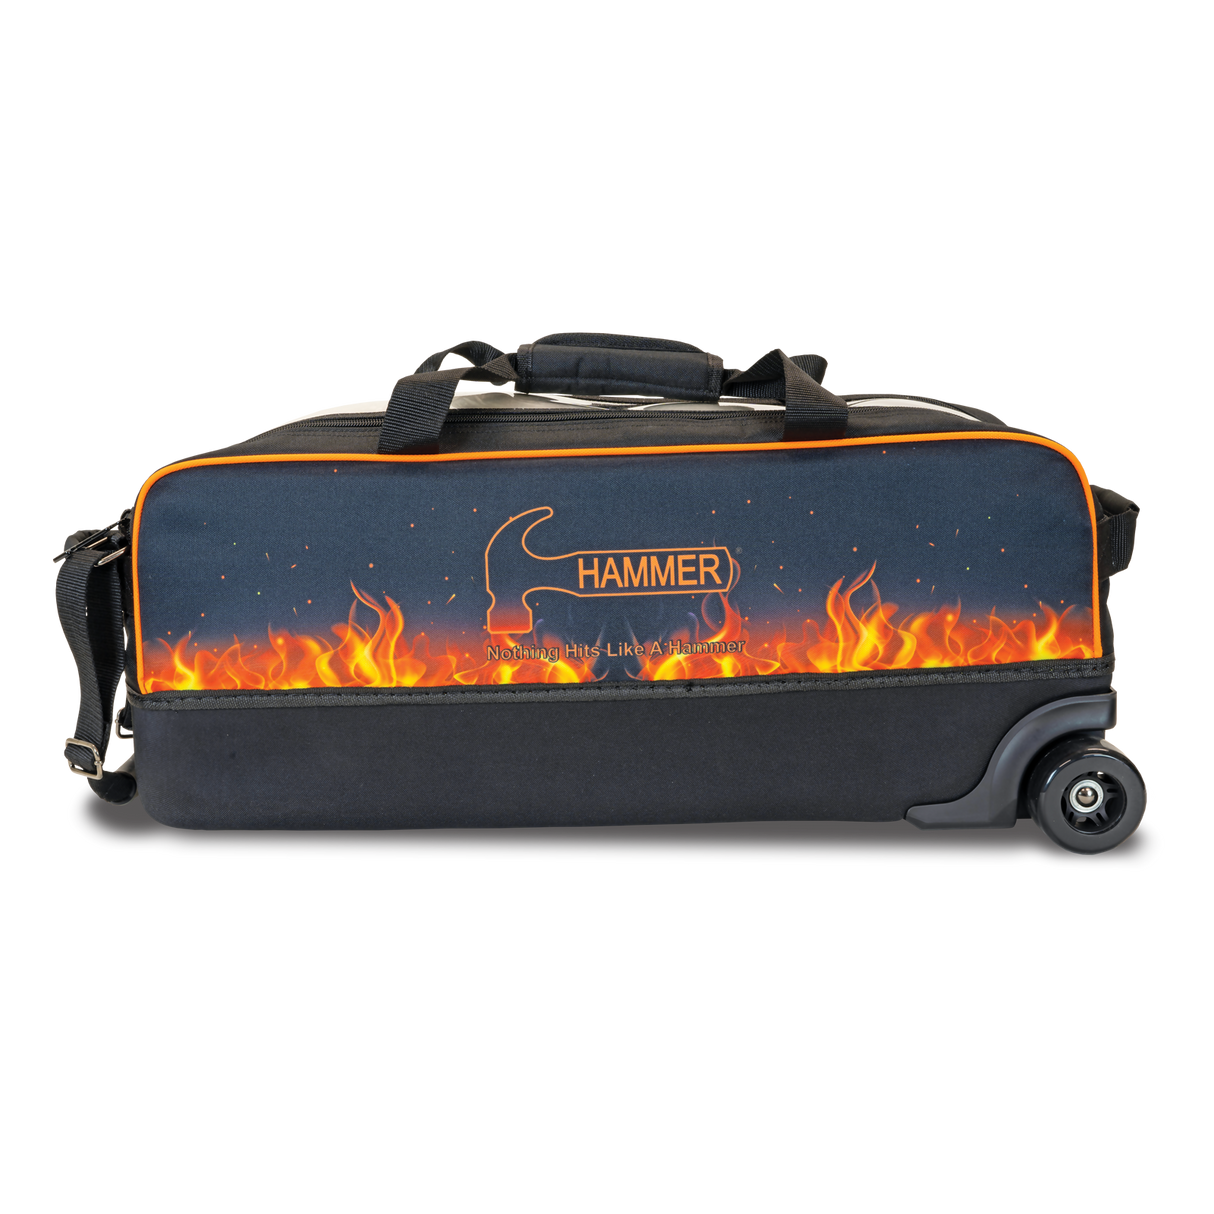 Hammer Flame Dye Sub Triple 3 Ball Tote Bowling Bag suitcase league tournament play sale discount coupon online pba tour